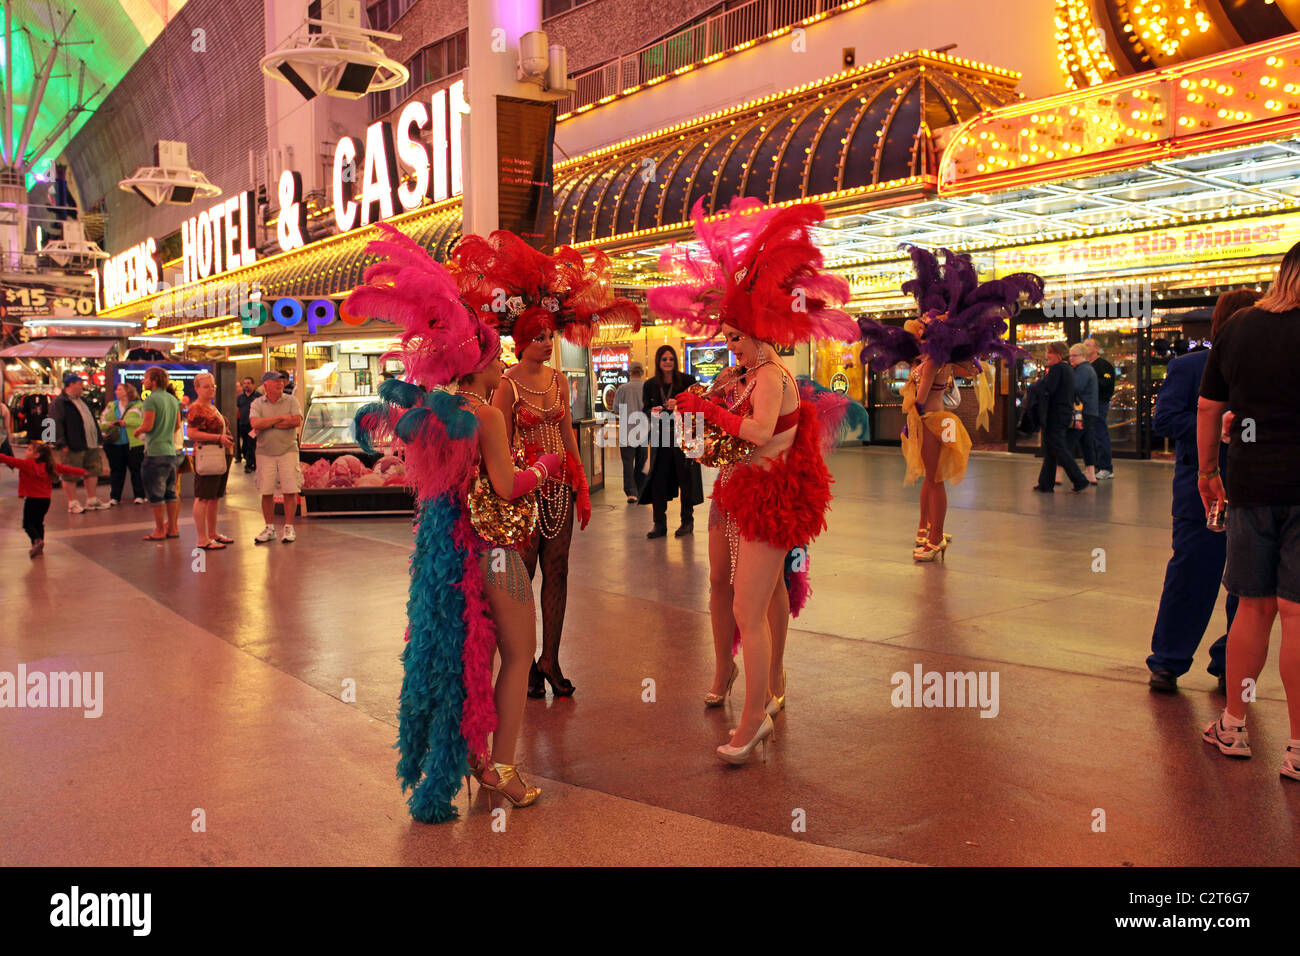 Las Vegas Showgirls in sexy Feder outfits Innenstadt Fremont Street Hotel  Casino Resorts Stockfotografie - Alamy